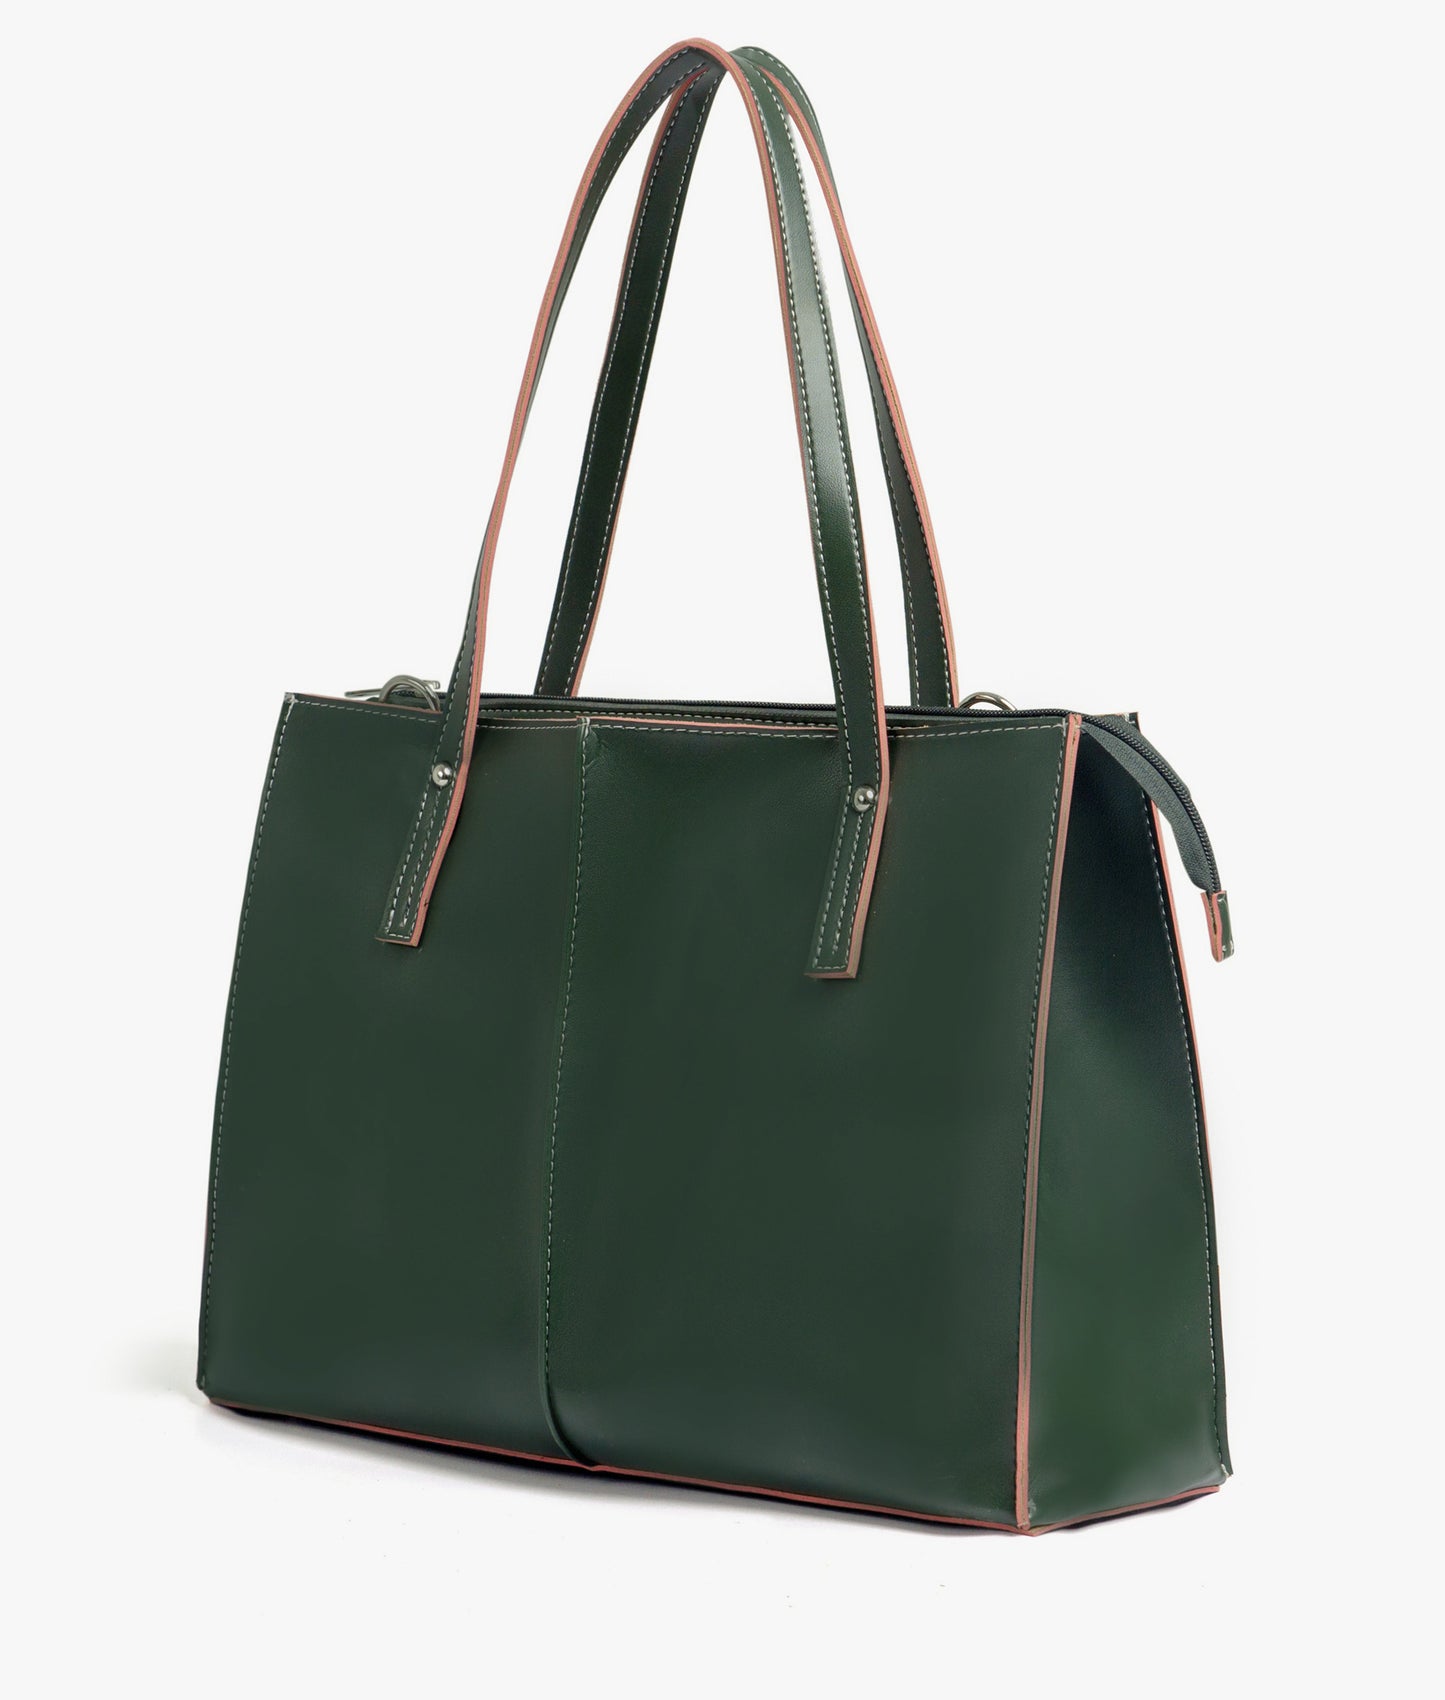 Green Ladies Tote Bag 561